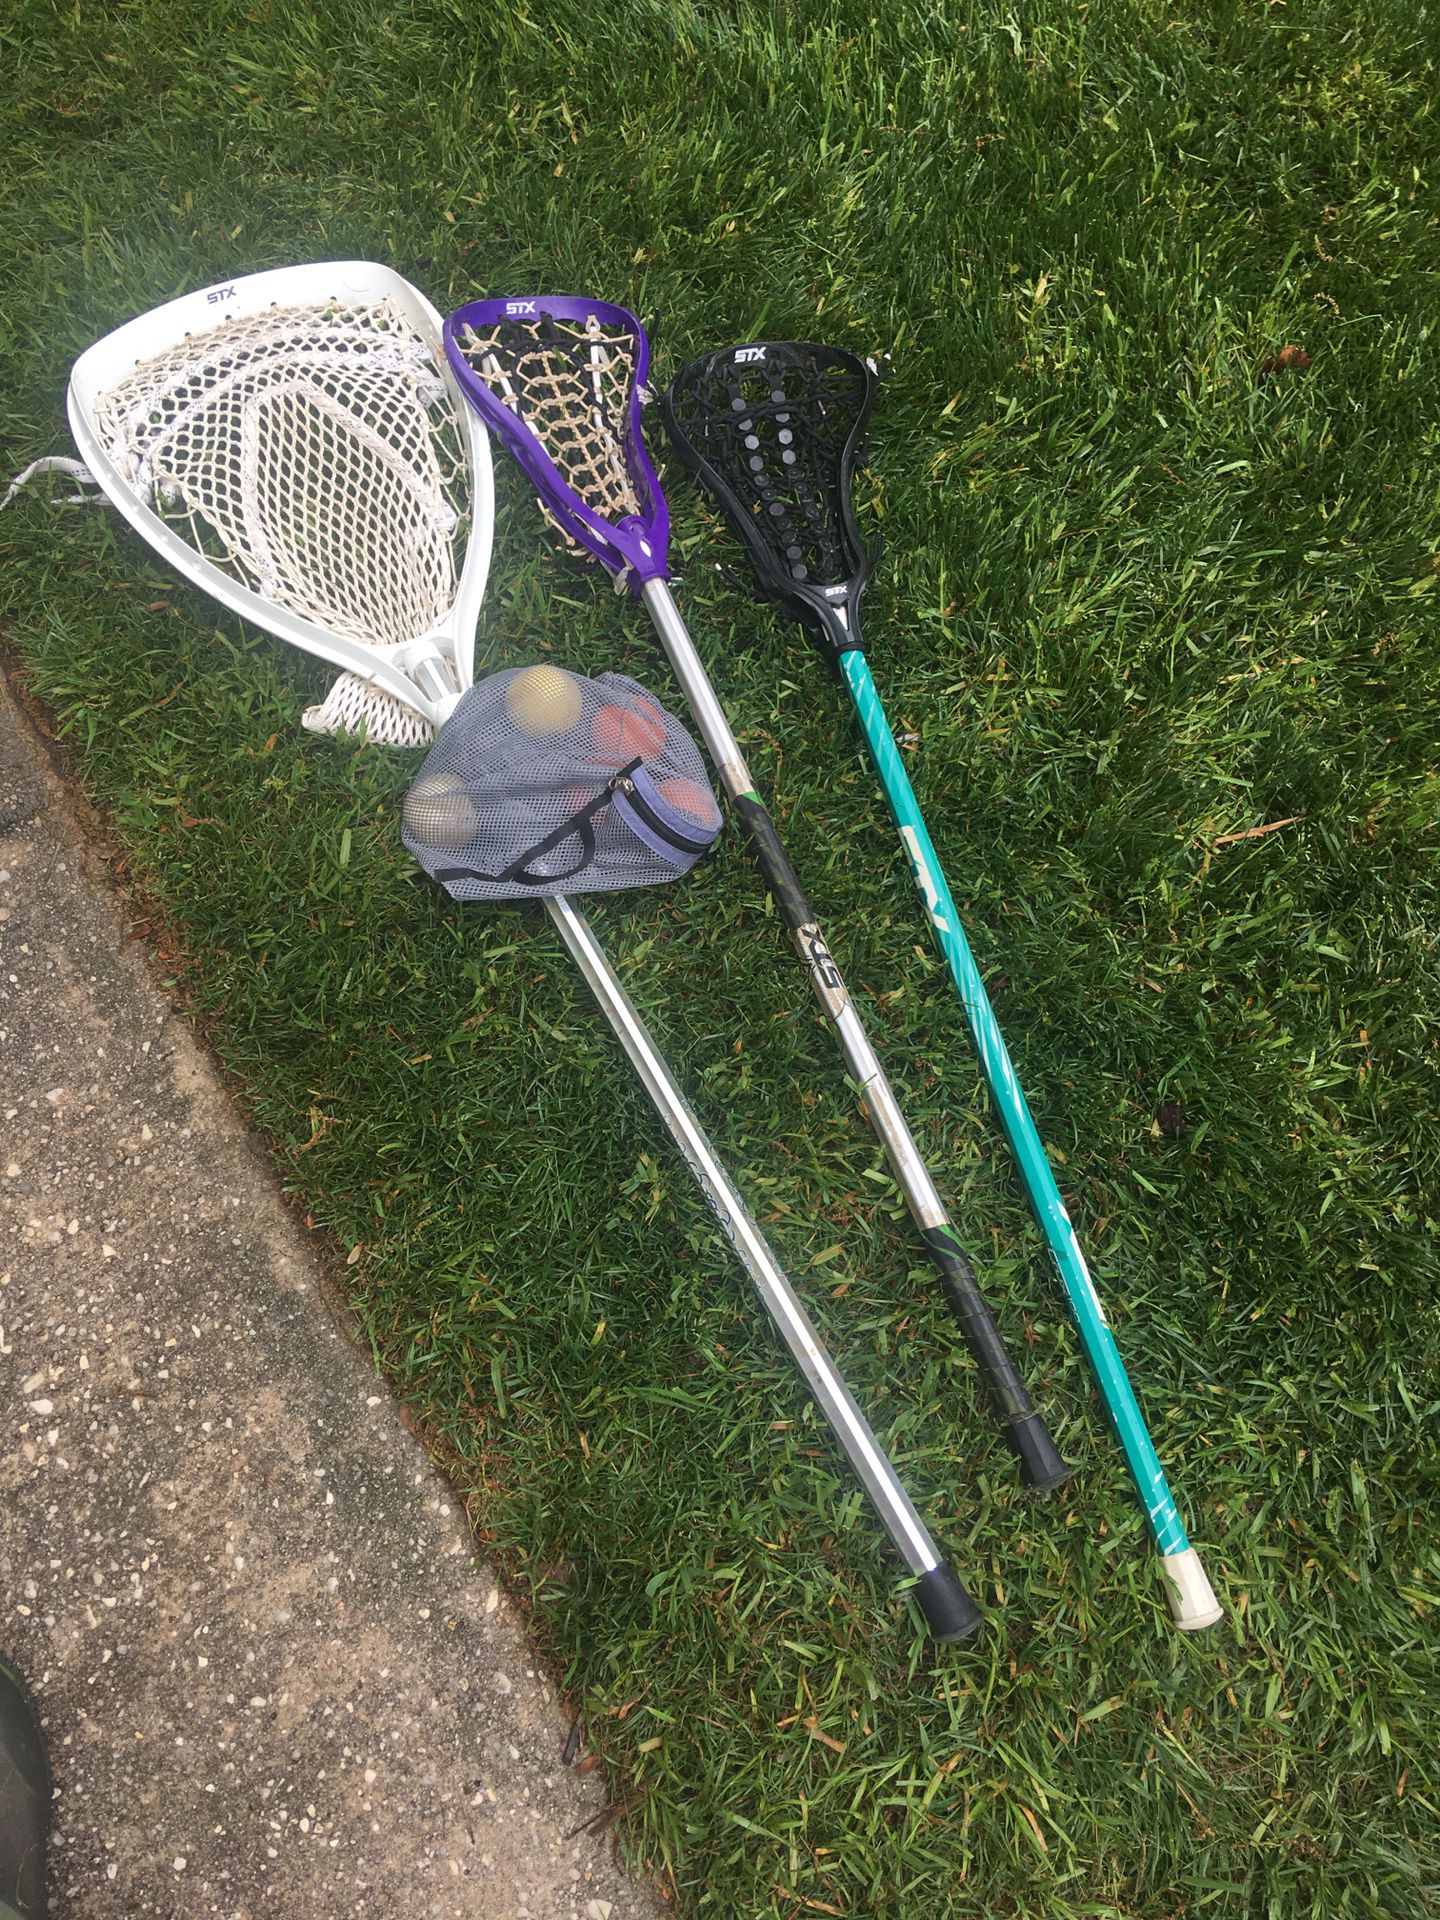 Girls lacrosse goalie stick, tennis racket and Kidd’s golf clubs, purple & black sticks sold